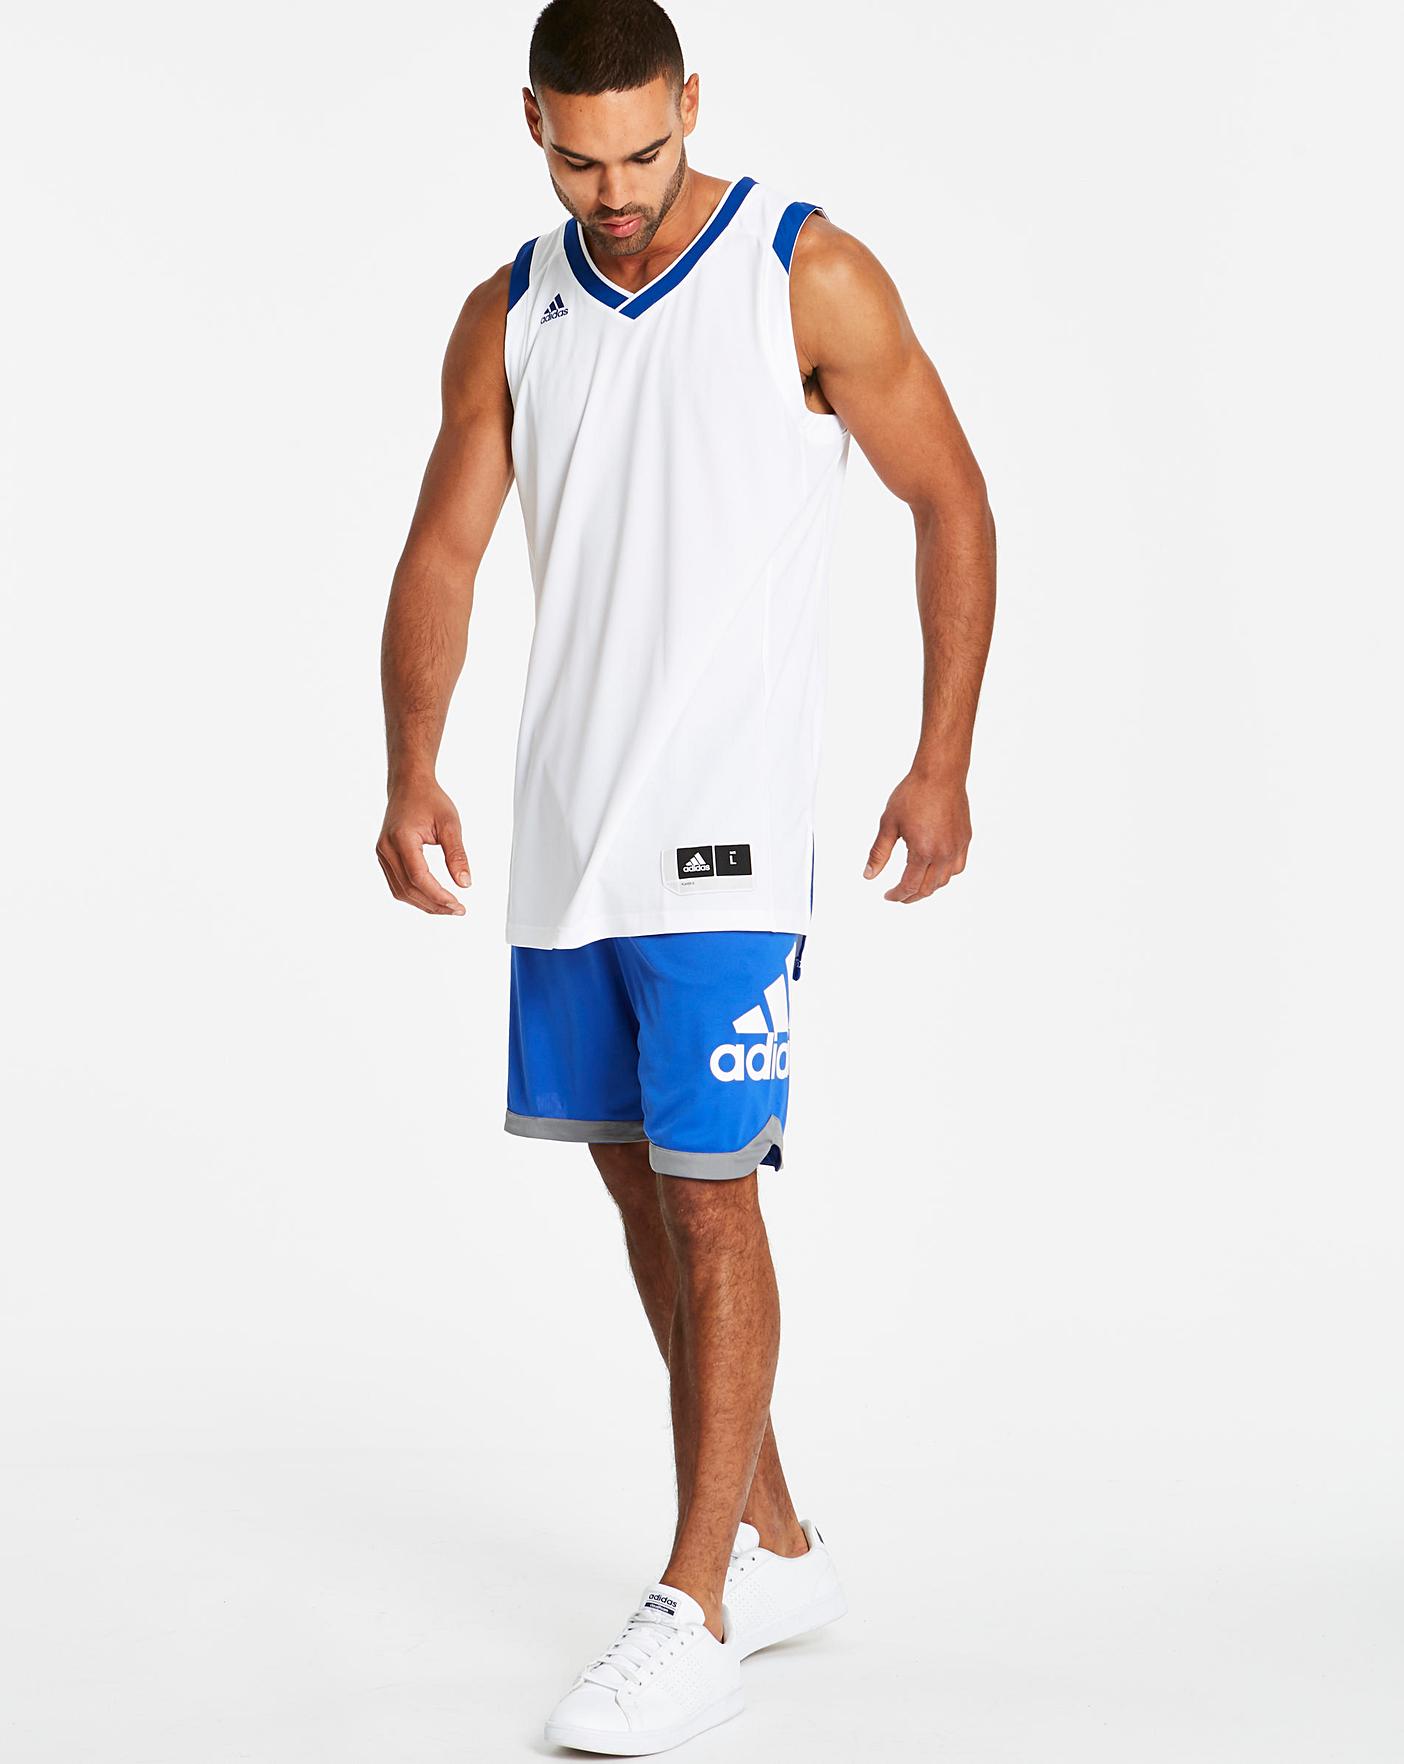 adidas Basketball Sleeveless Jersey | Crazy Clearance